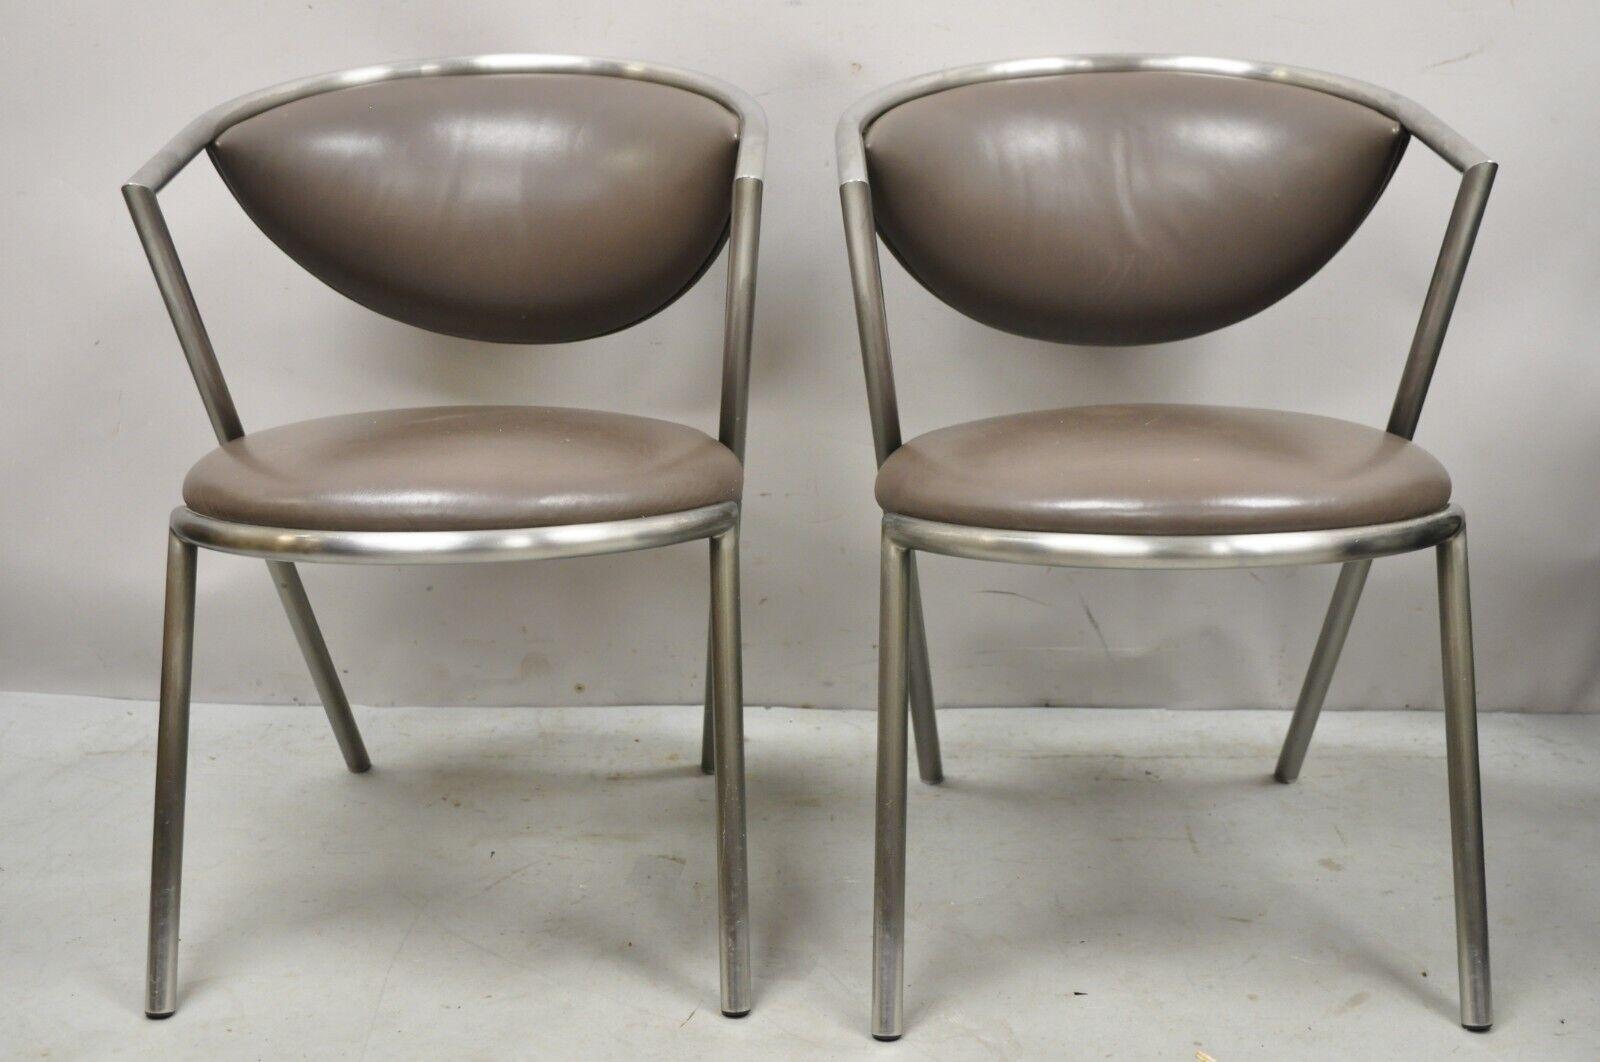 Vintage Brueton Mid-Century Modern tubular steel cat eye chairs - a pair. Item features brushed stainless steel frames, original brown vinyl upholstery, 